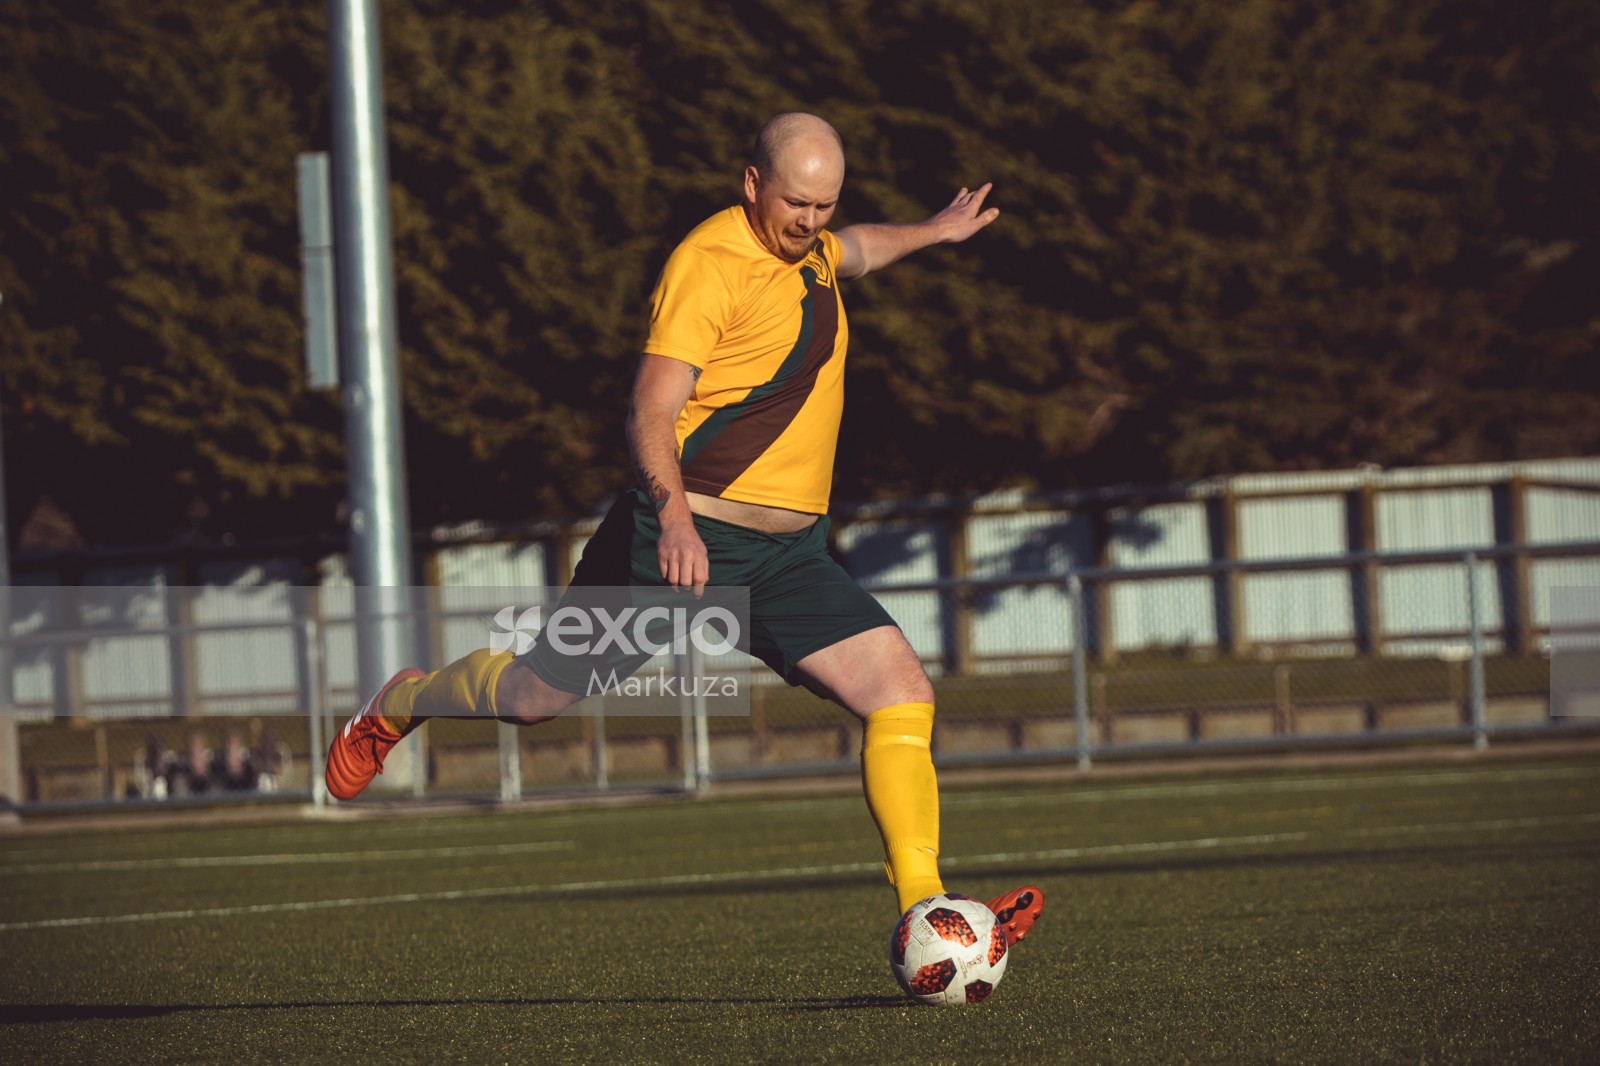 Bald player in orange cleats kicking ball - Sports Zone sunday league